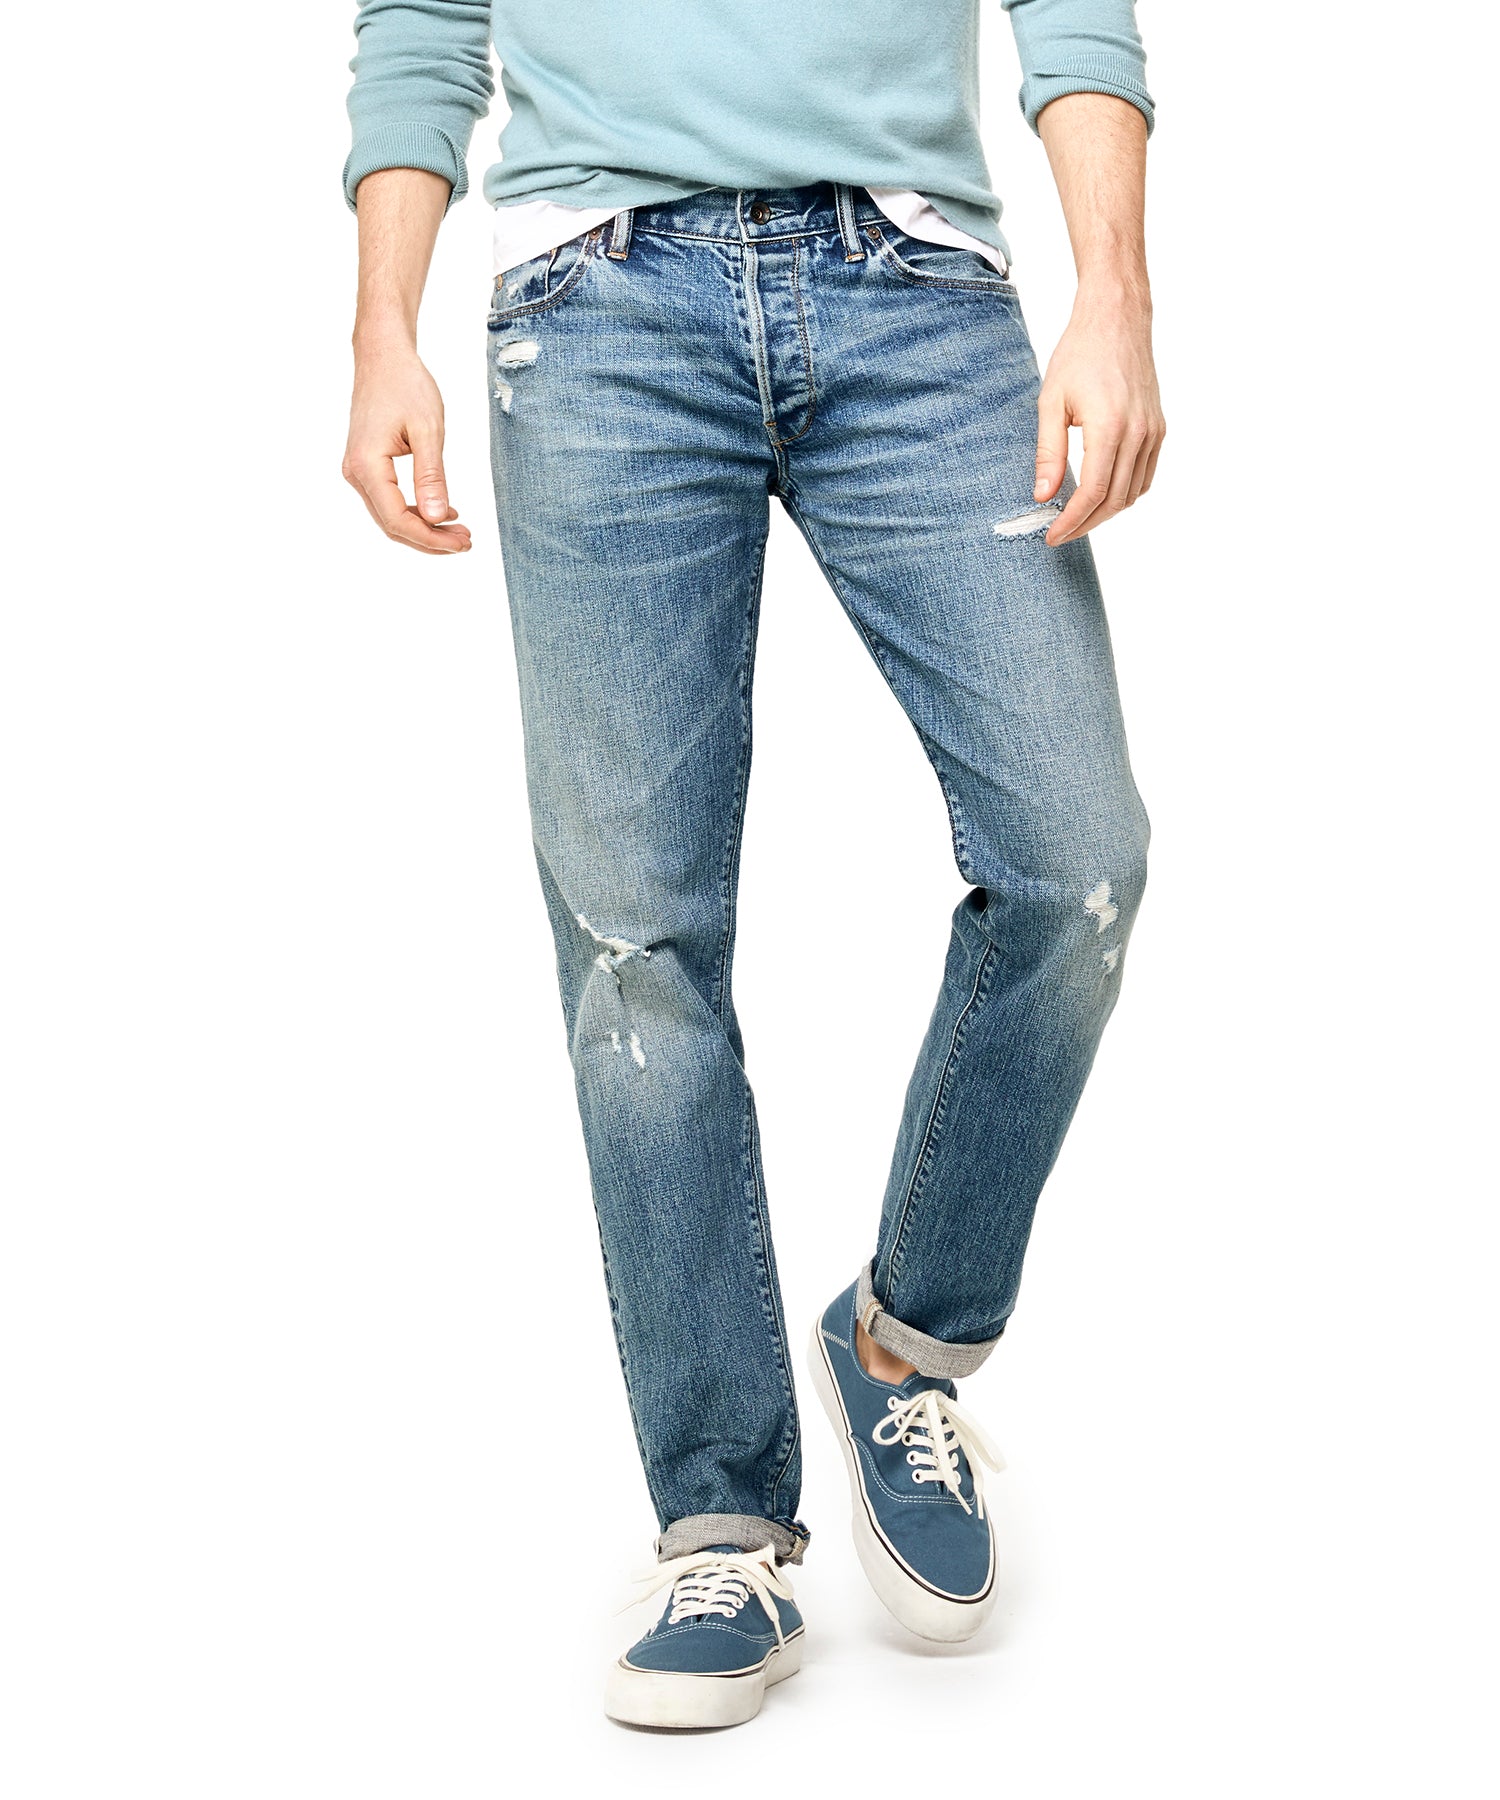 skinny fit denim jeans